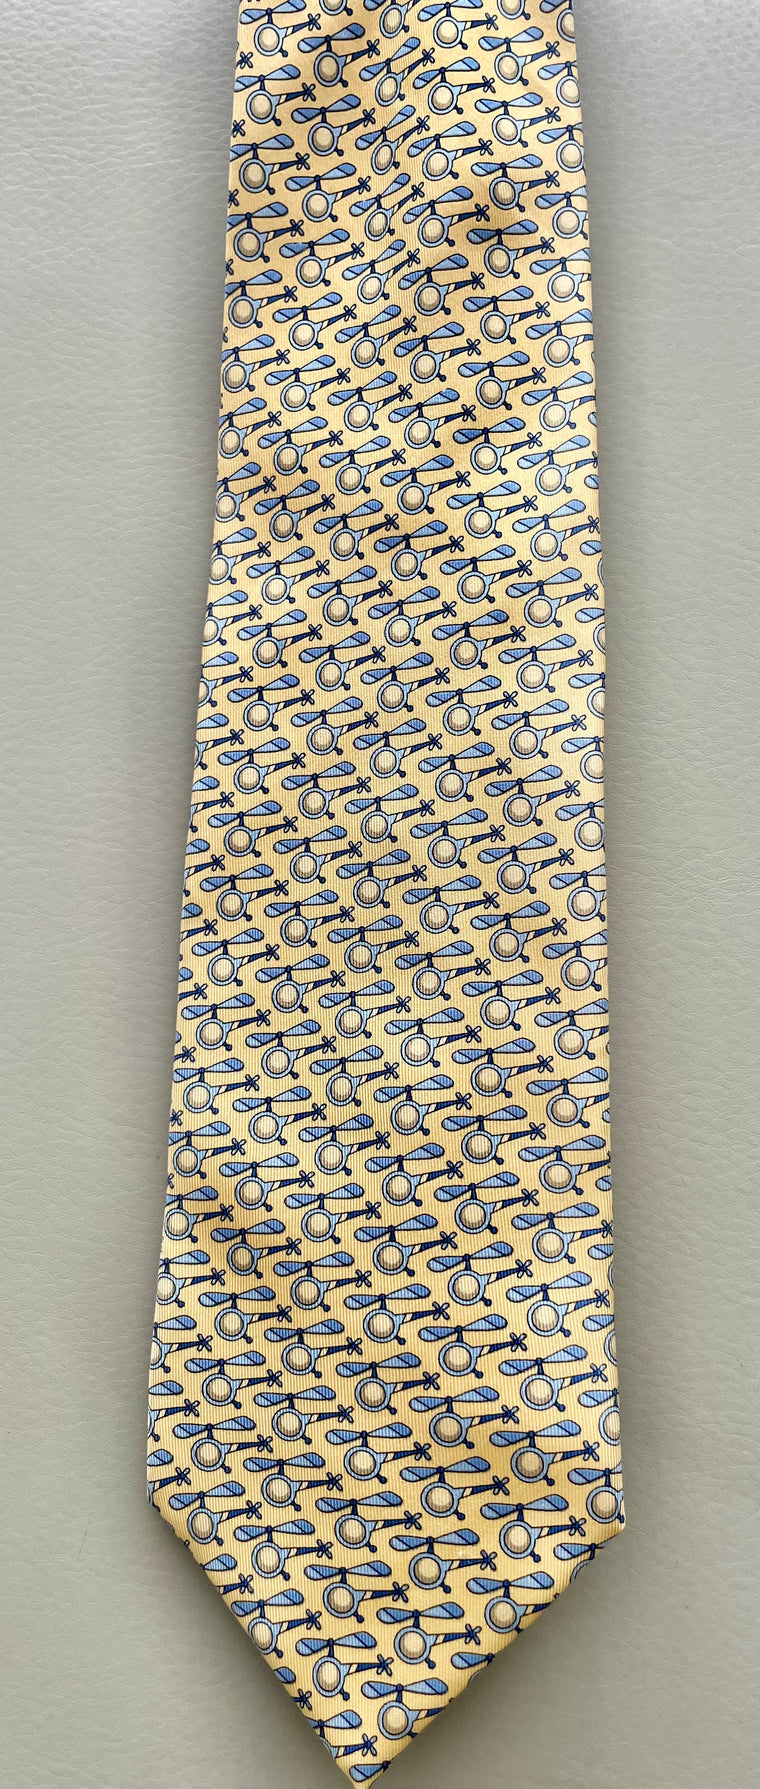 Salvatore Ferragamo Yellow/Blue Printed Tie